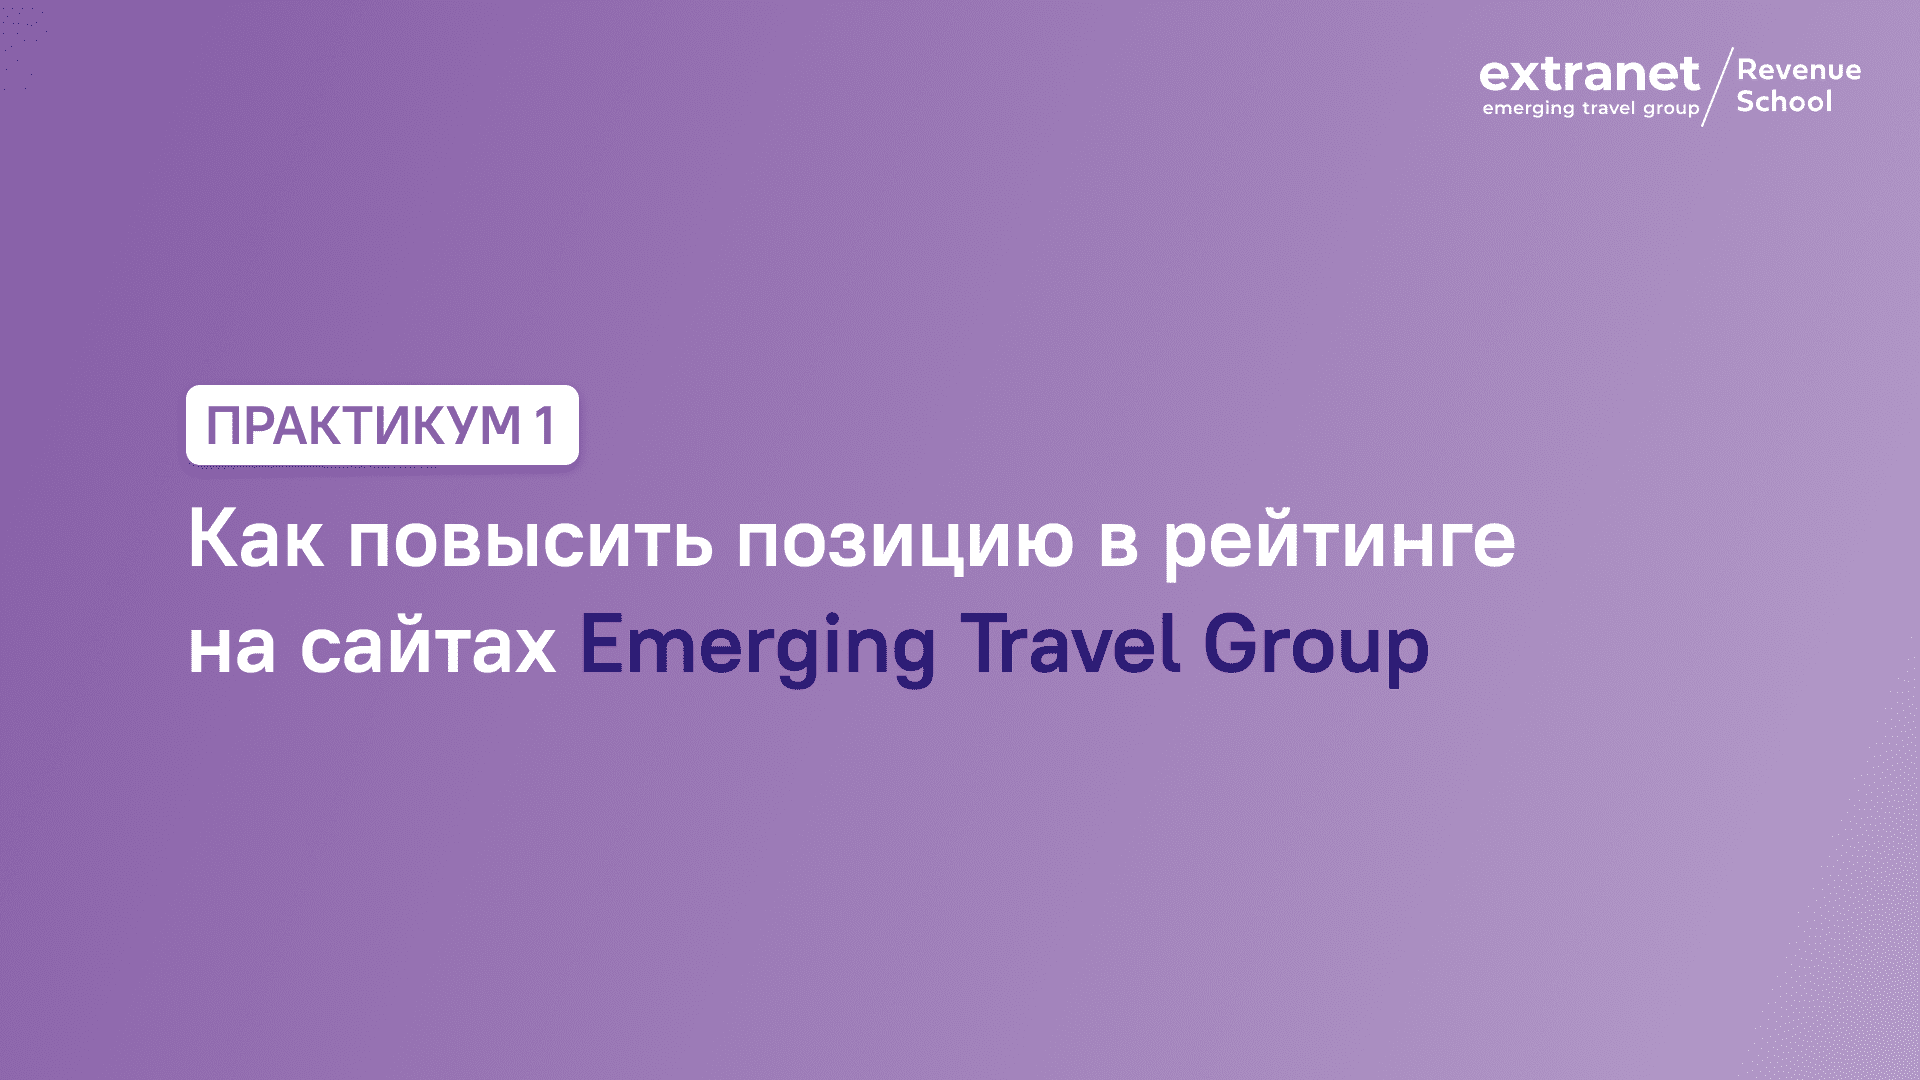 Emerging travel. Extranet emerging Travel. Emerging Travel Group. Щелково Емерджинг Тревел. Emerging Travel Group pechat шьящ.